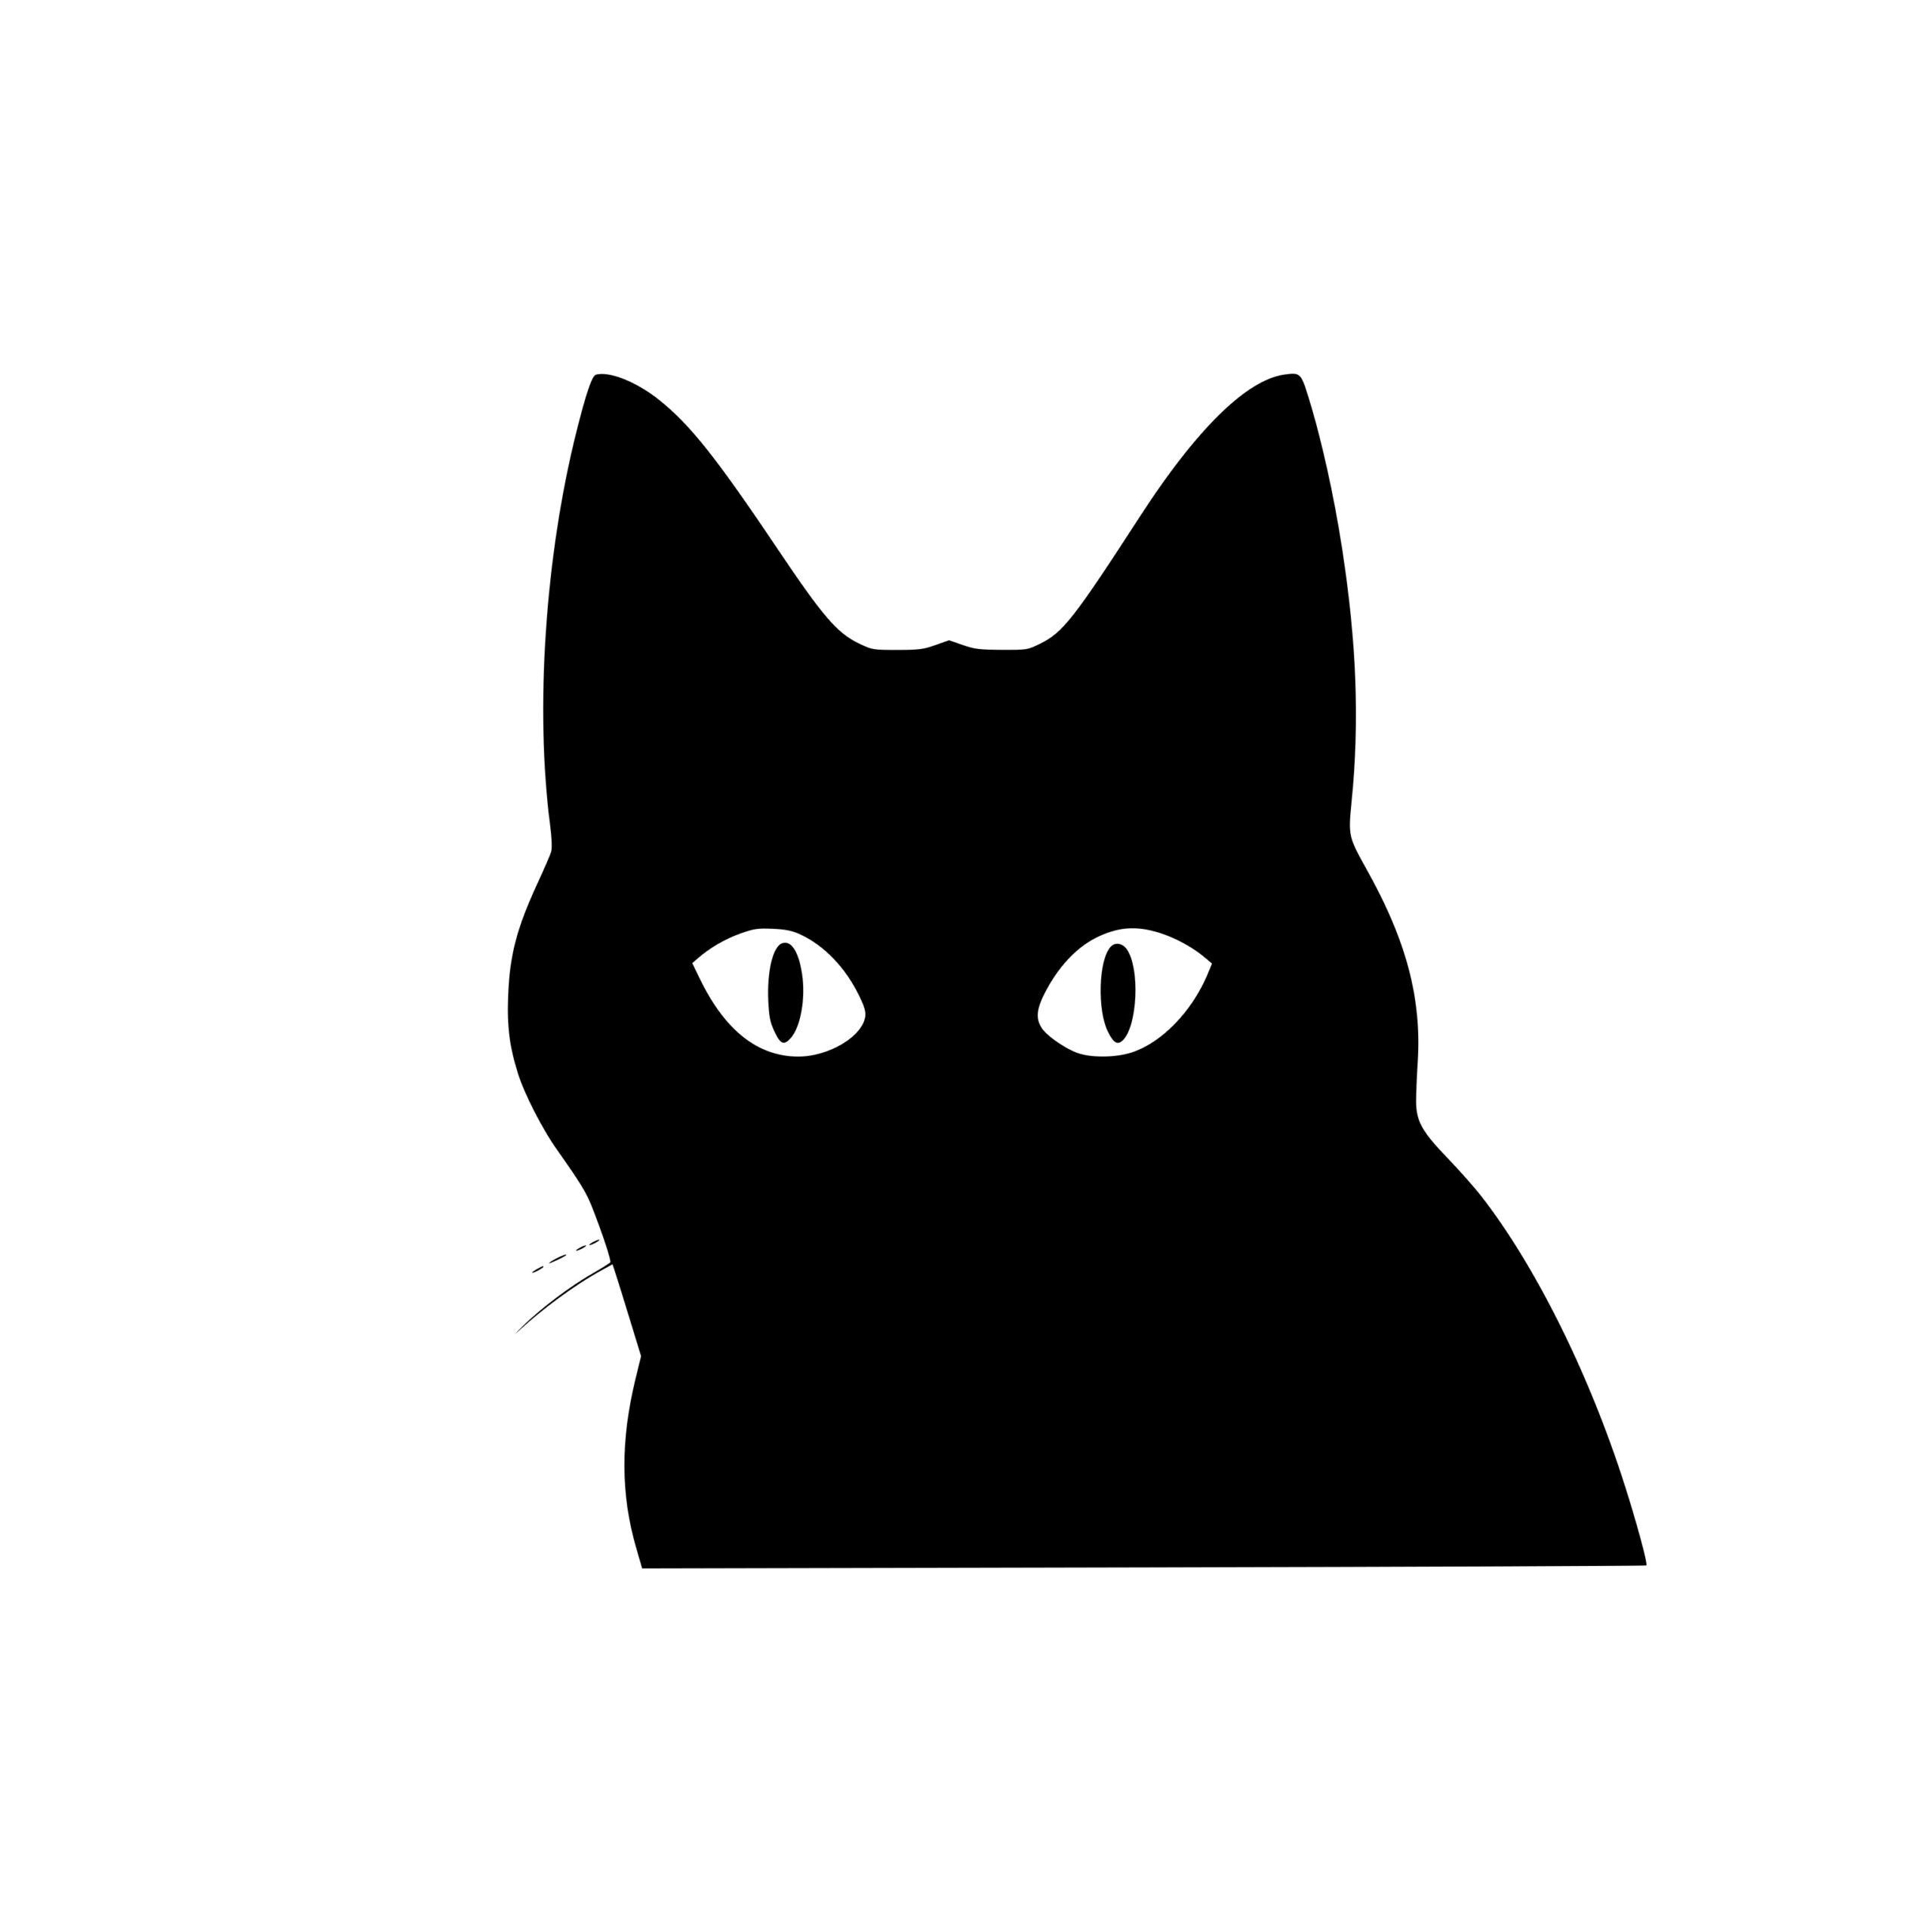 Hiding Cat SVG Image for Cricut, Silhouette, xTool, Glowforge